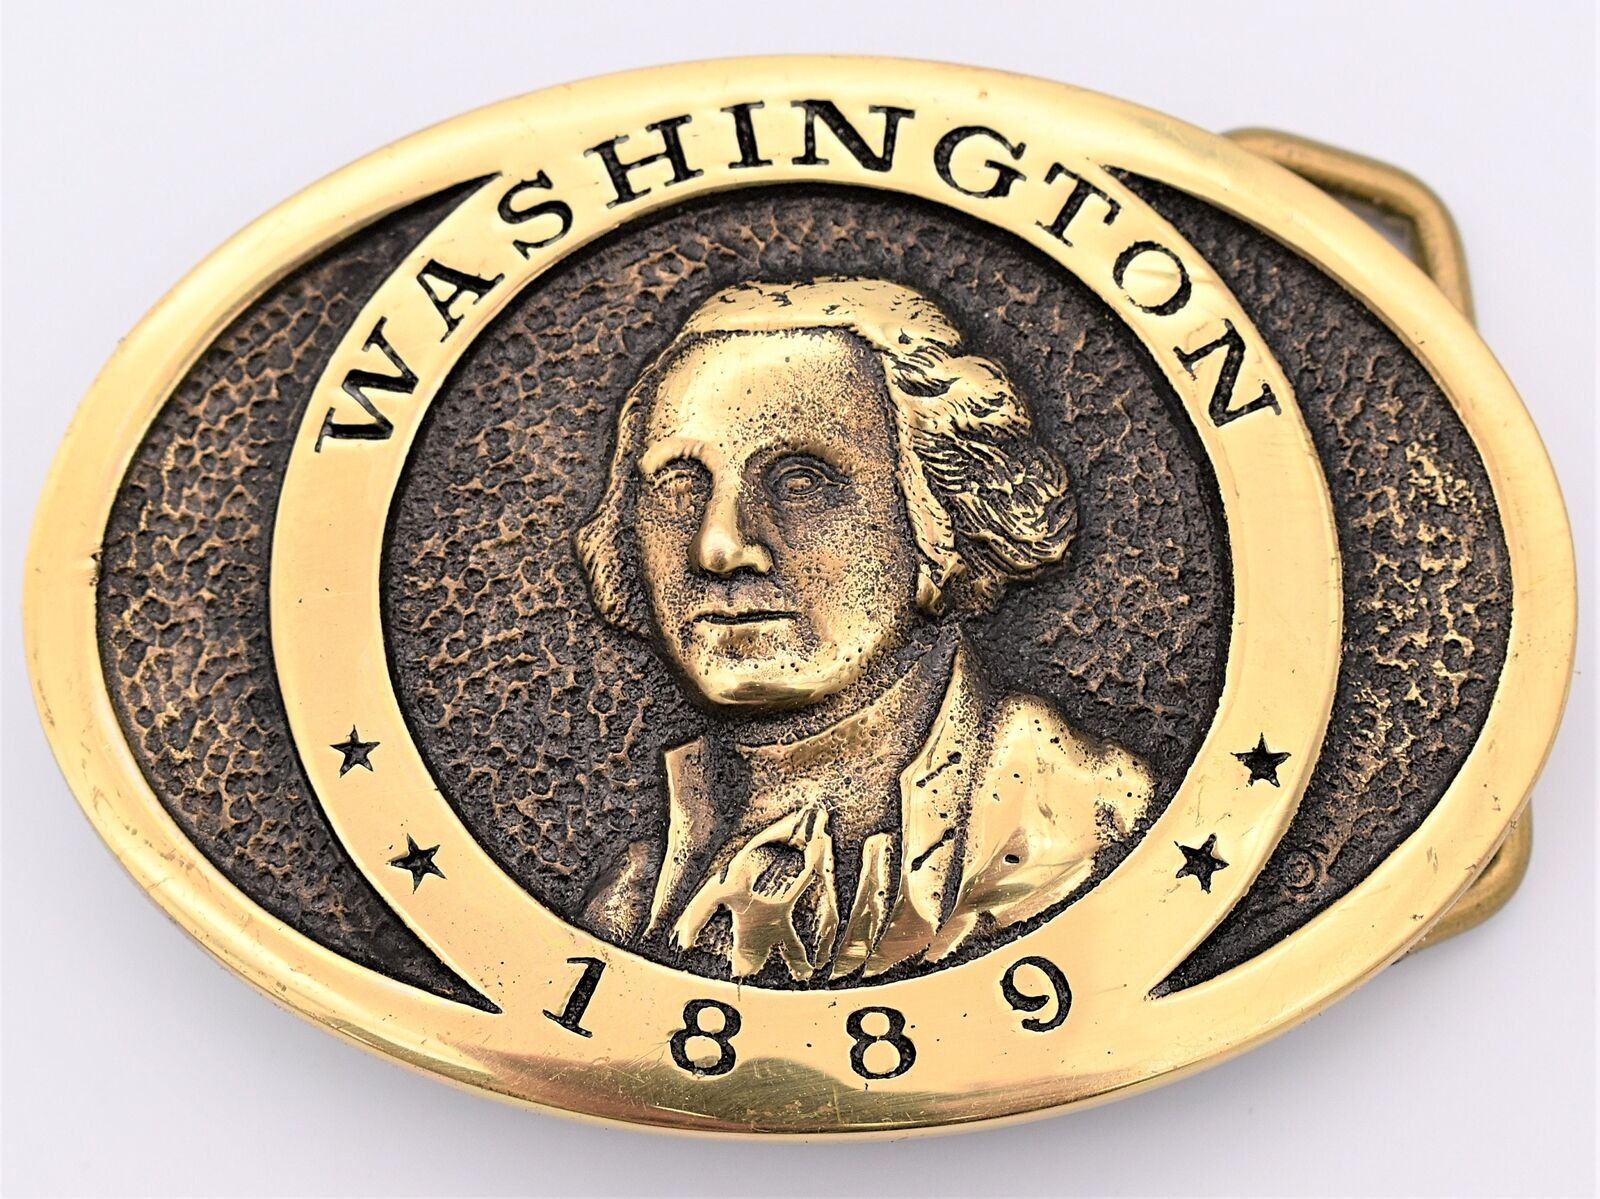 Washington Statehood Year George Washington Solid Brass Vintage Belt Buckle